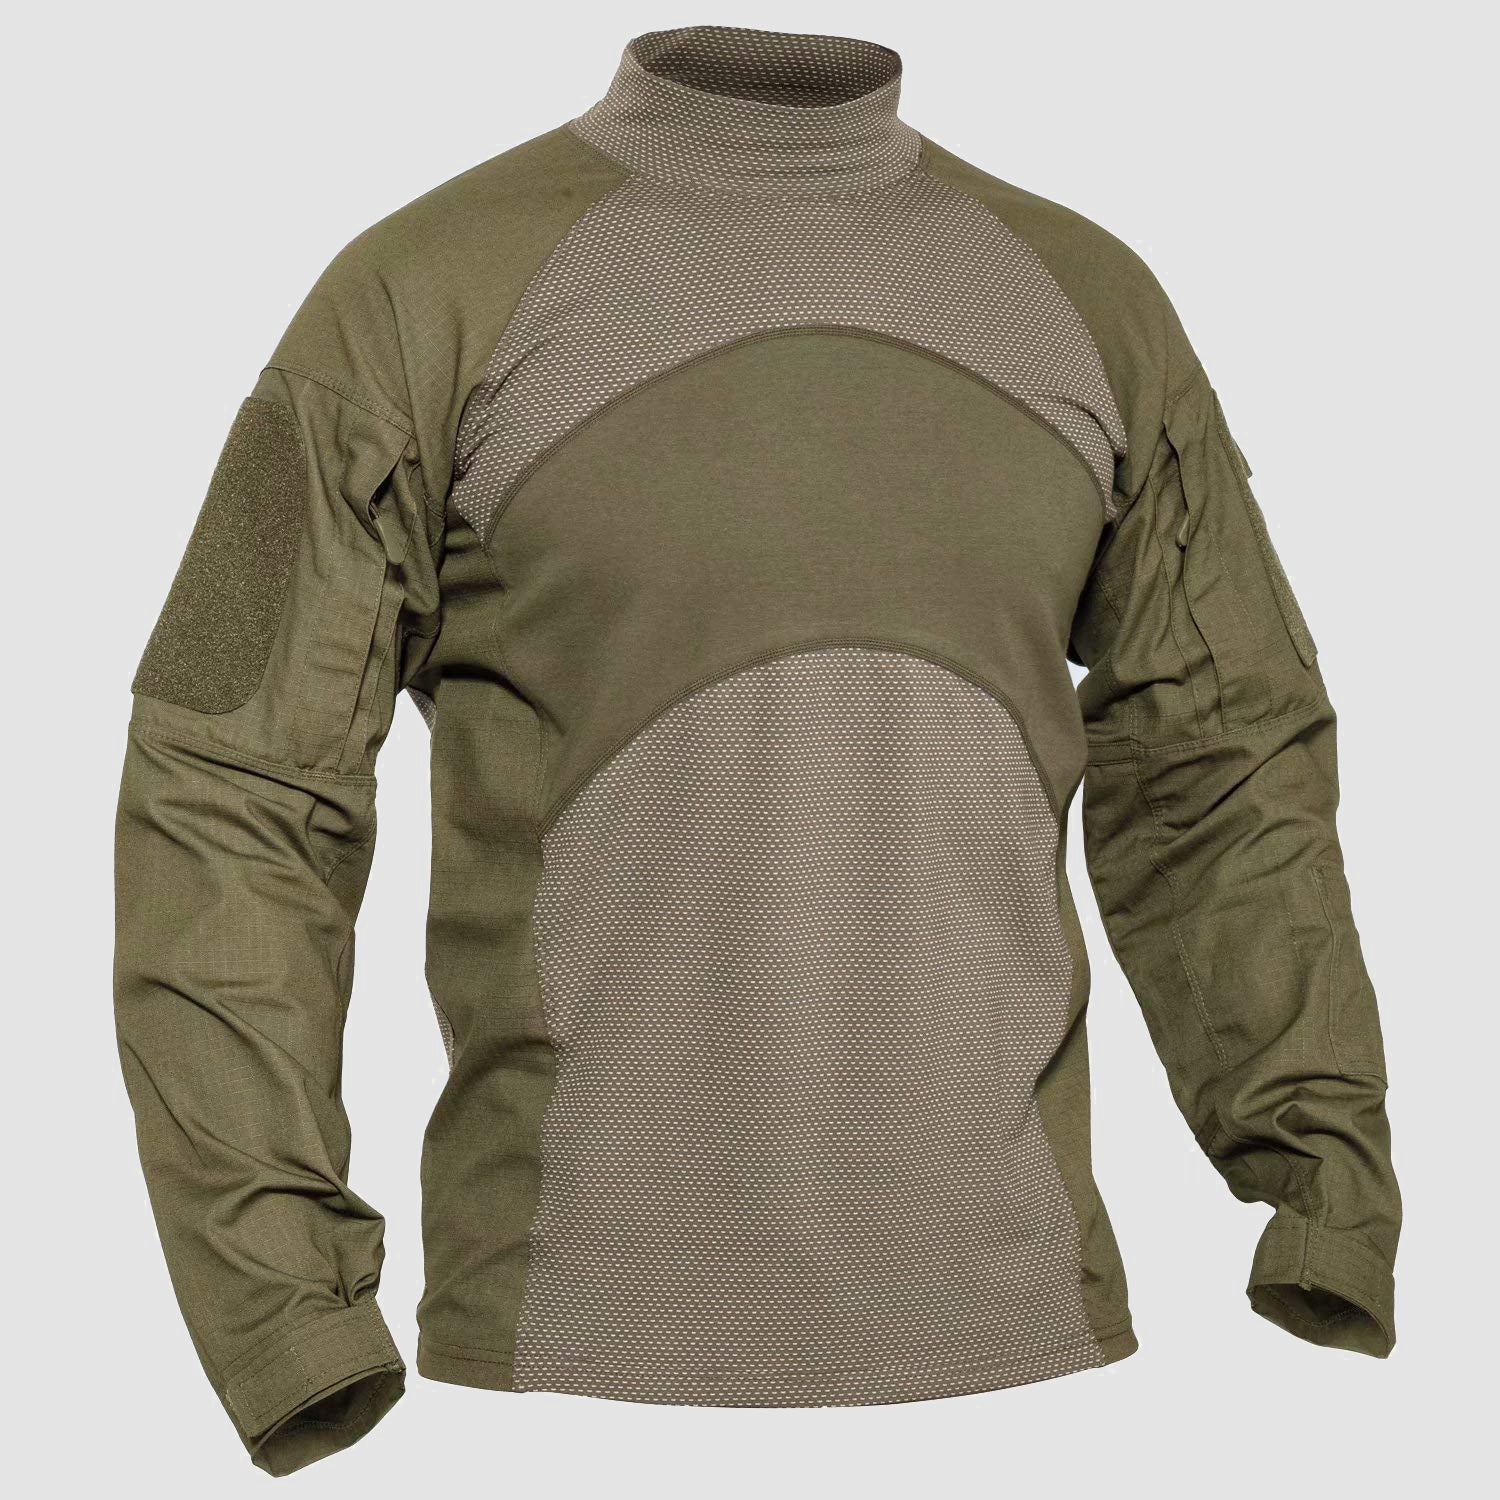 Men's Tactical Shirts with Zipper Pocket Long Sleeve Work Shirts – MAGCOMSEN